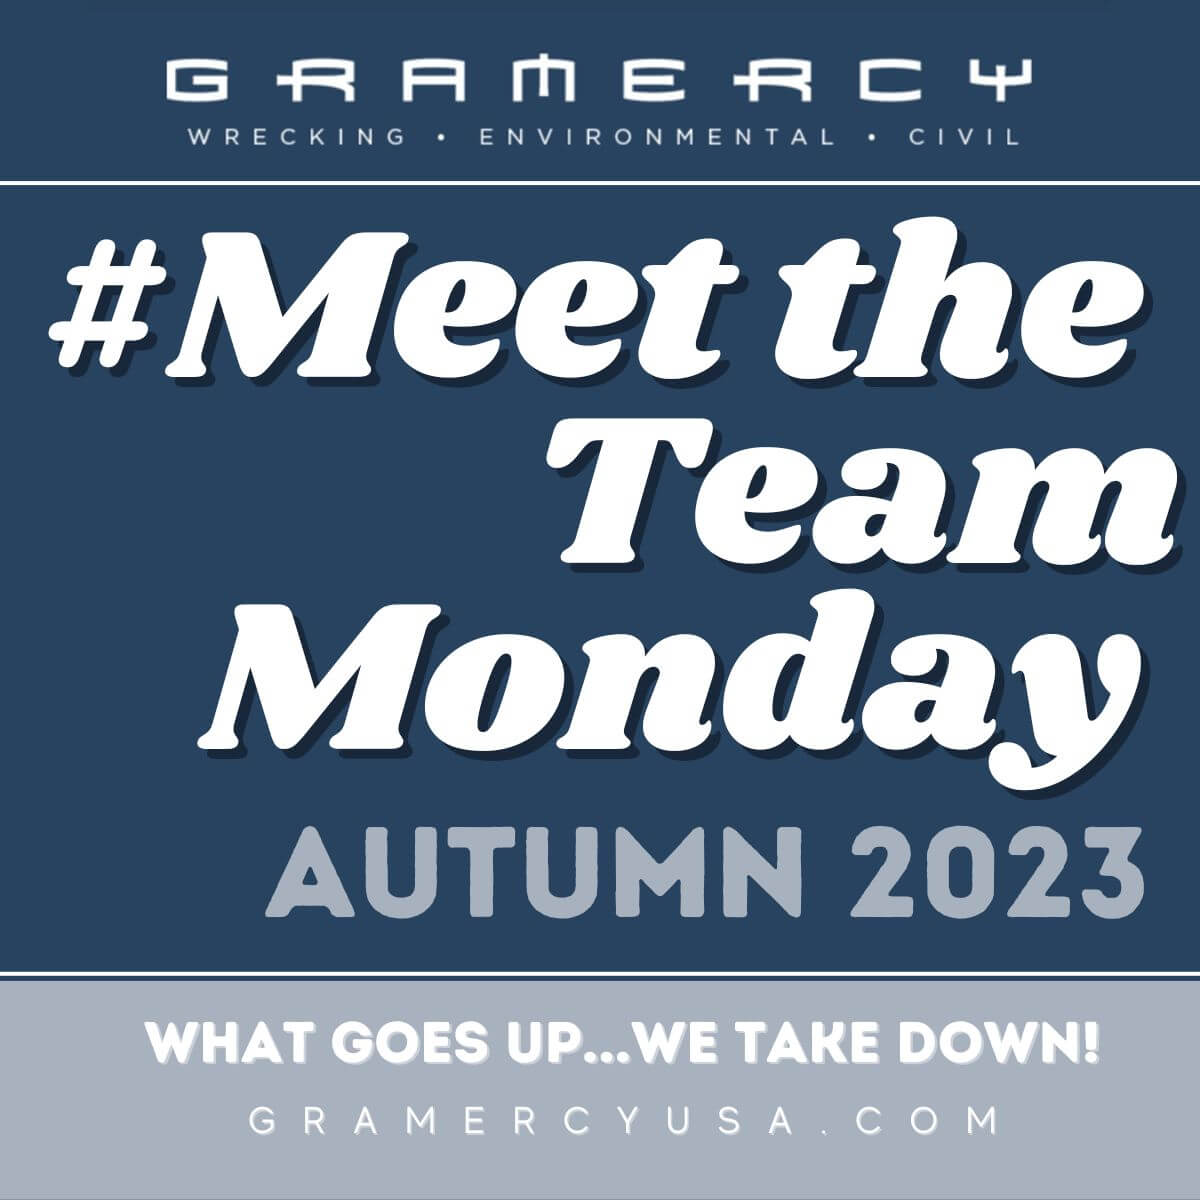 Meet the Team Monday profiles for Autumn 2023